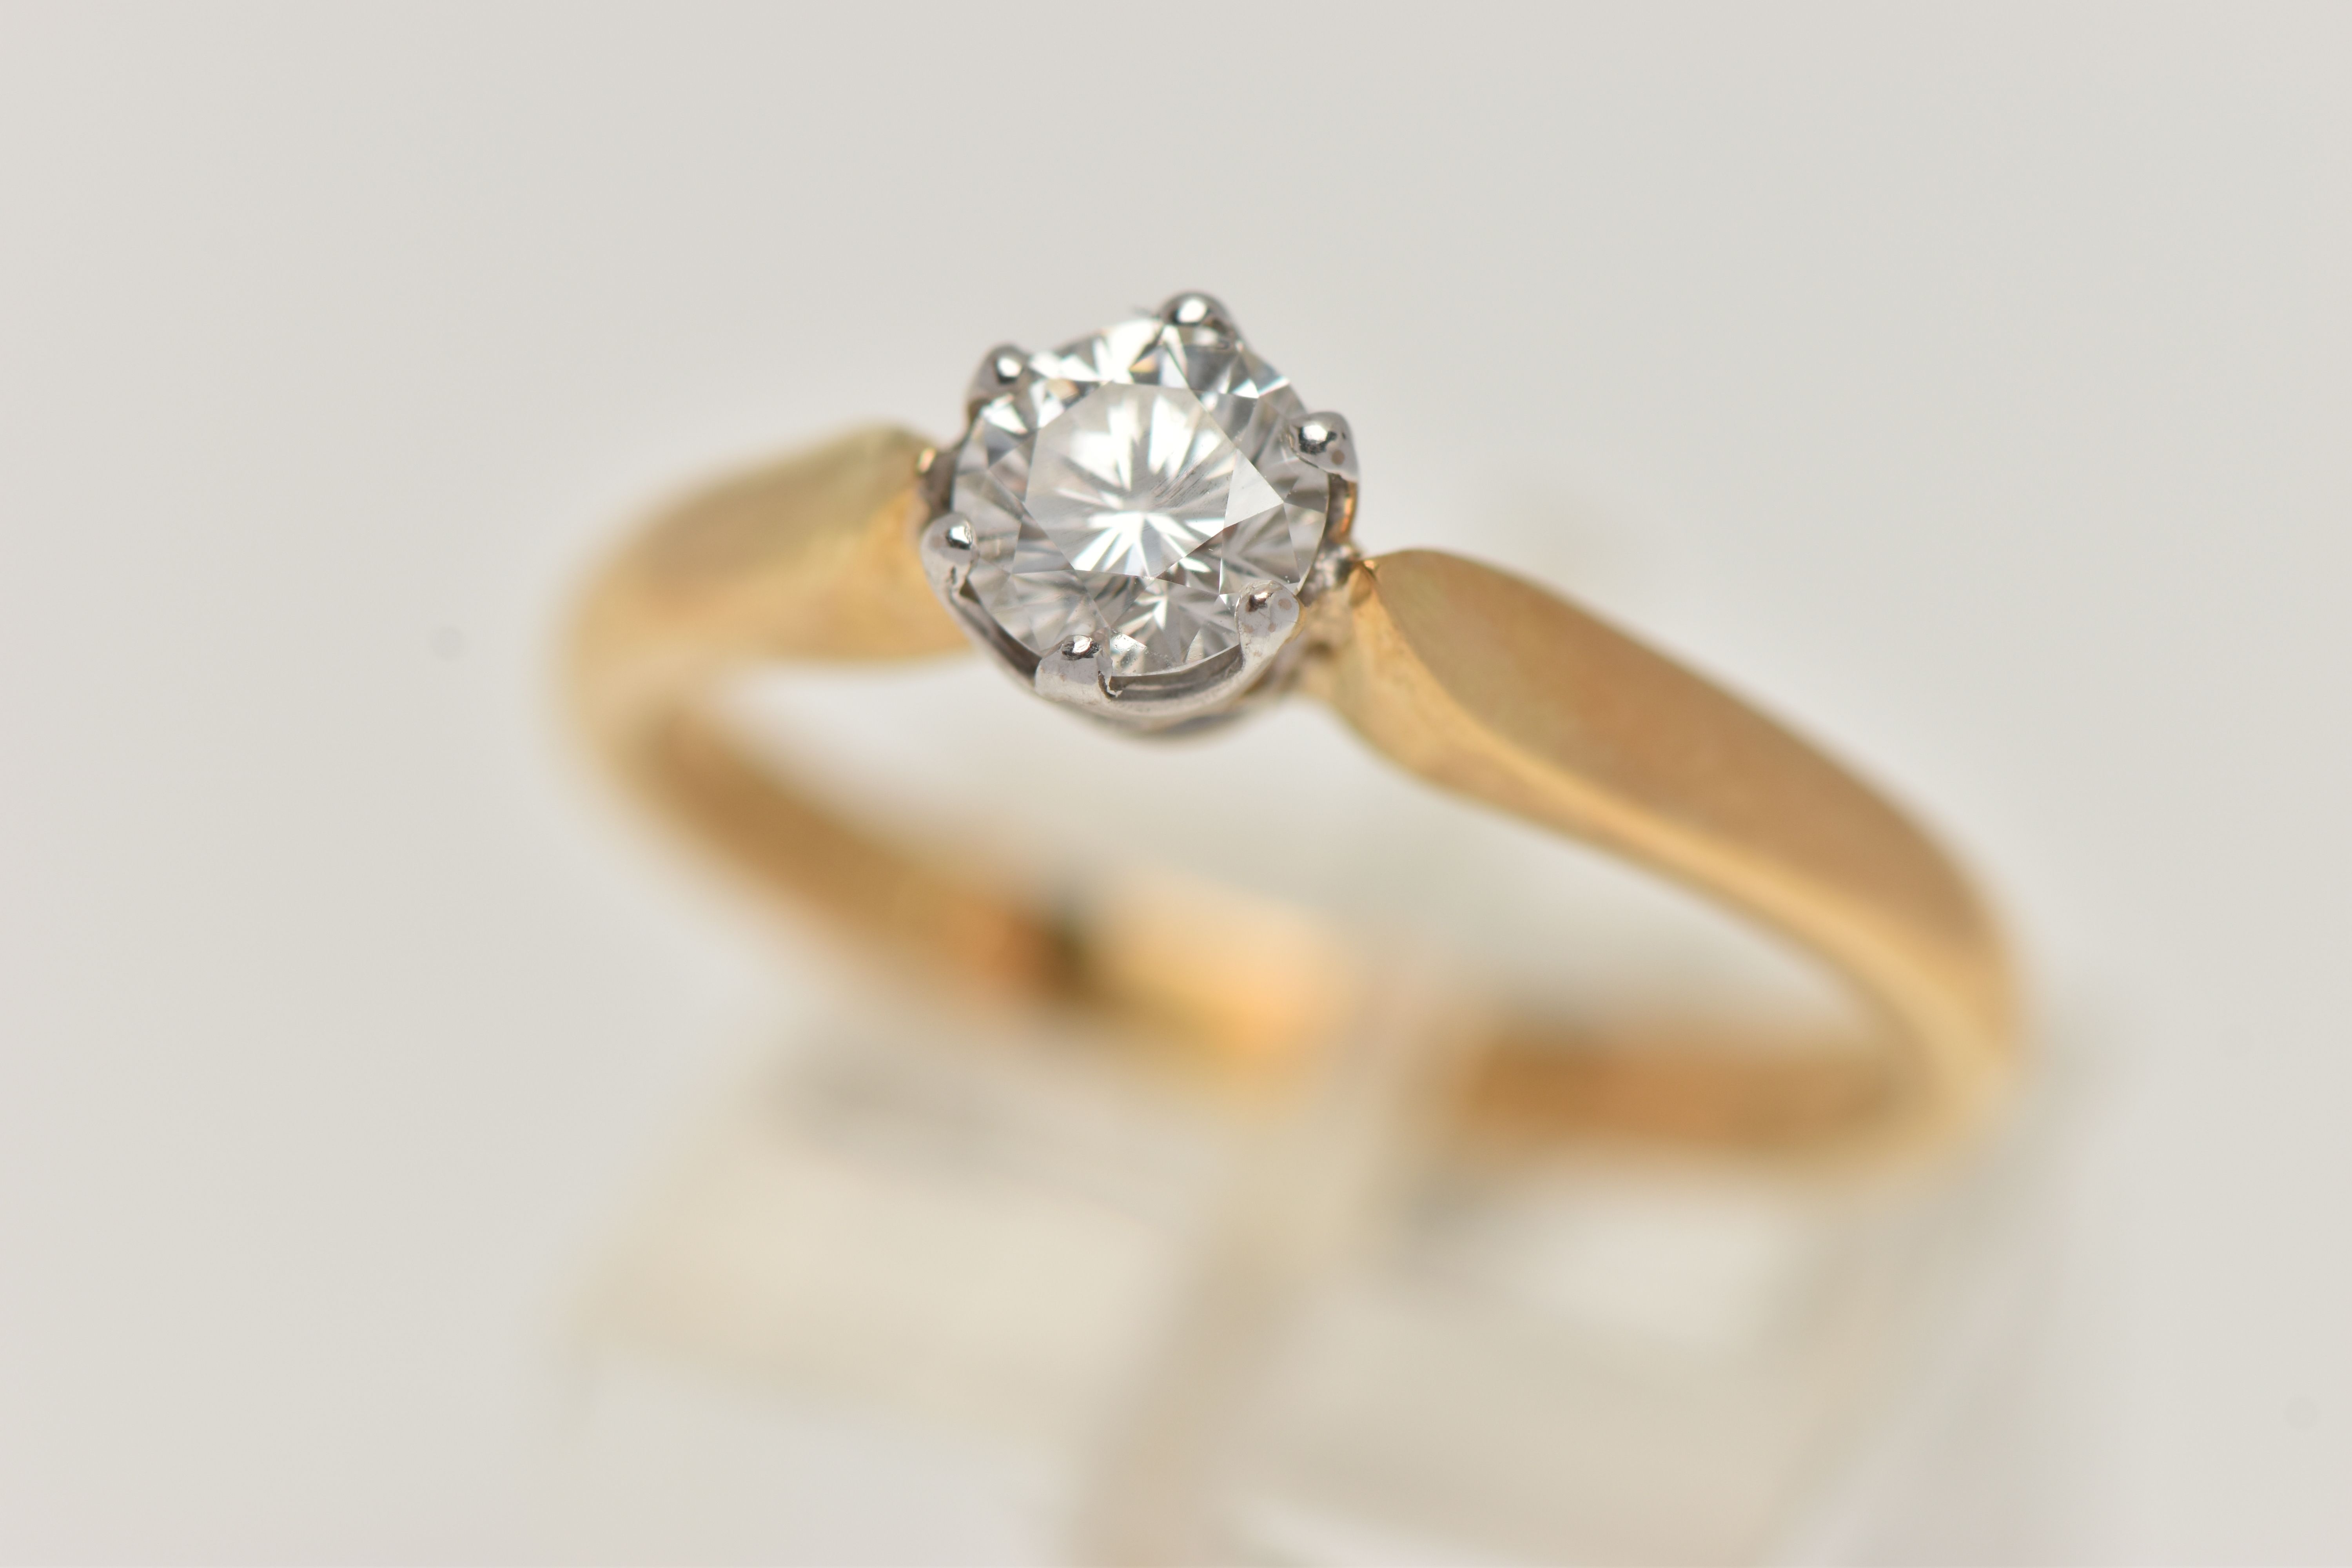 AN 18CT GOLD SINGLE STONE DIAMOND RING, round brilliant cut diamond, faceted girdle, estimated